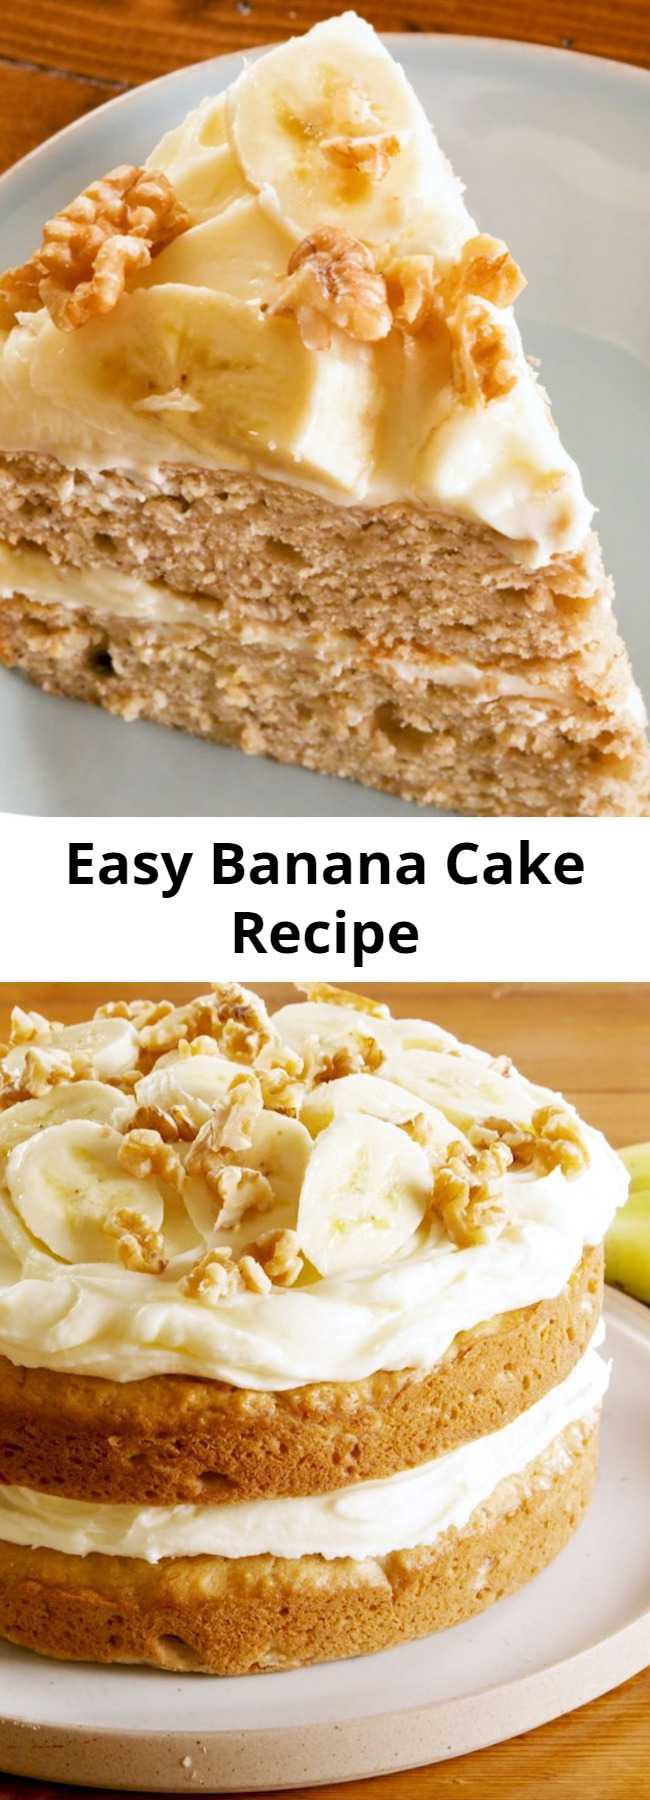 Easy Banana Cake Recipe - You can't go wrong with this Banana Cake recipe.